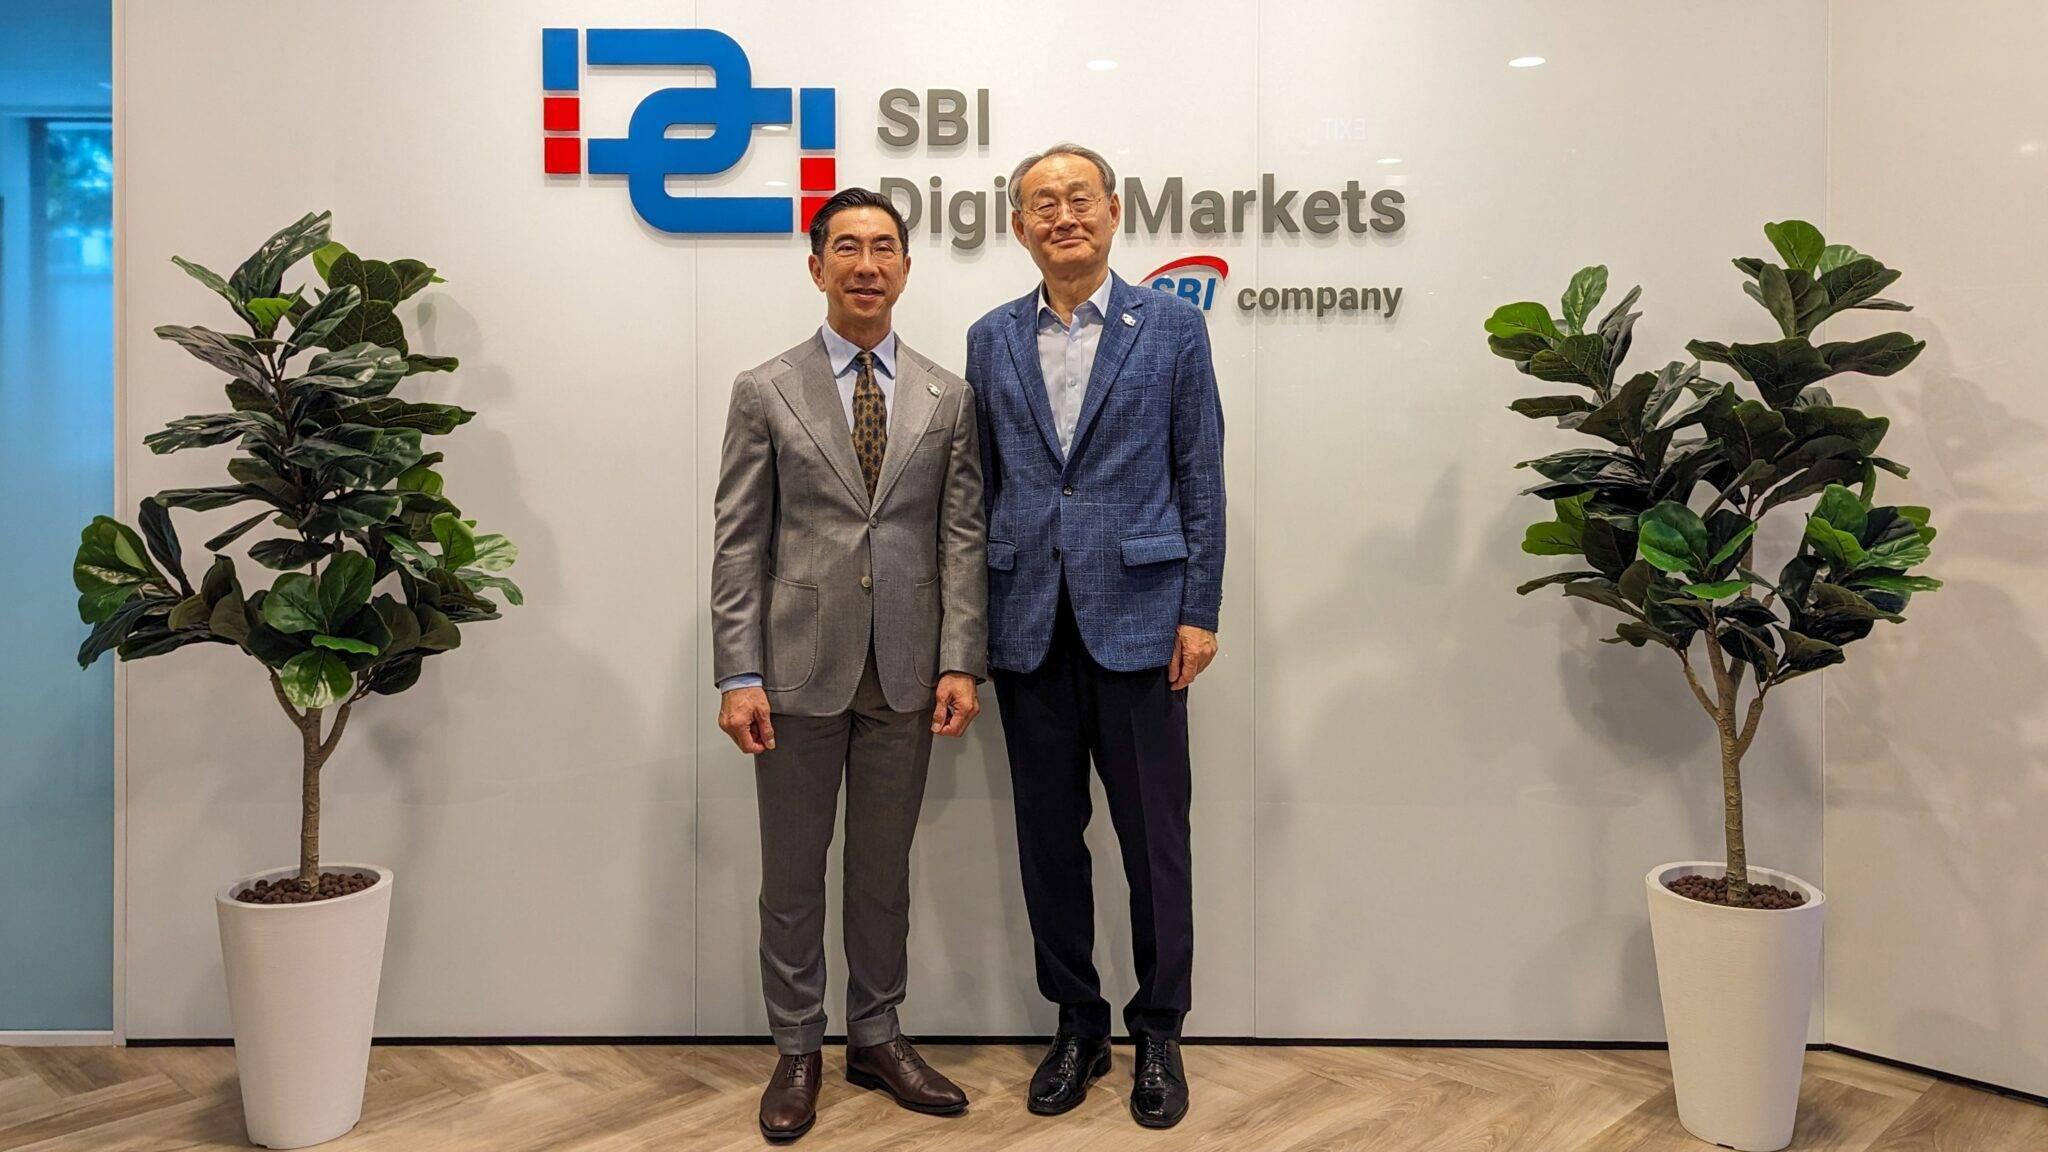 sbi-digital-markets-bo-nhiem-cuu-lanh-dao-ngan-hang-han-quoc-lam-co-van-truong